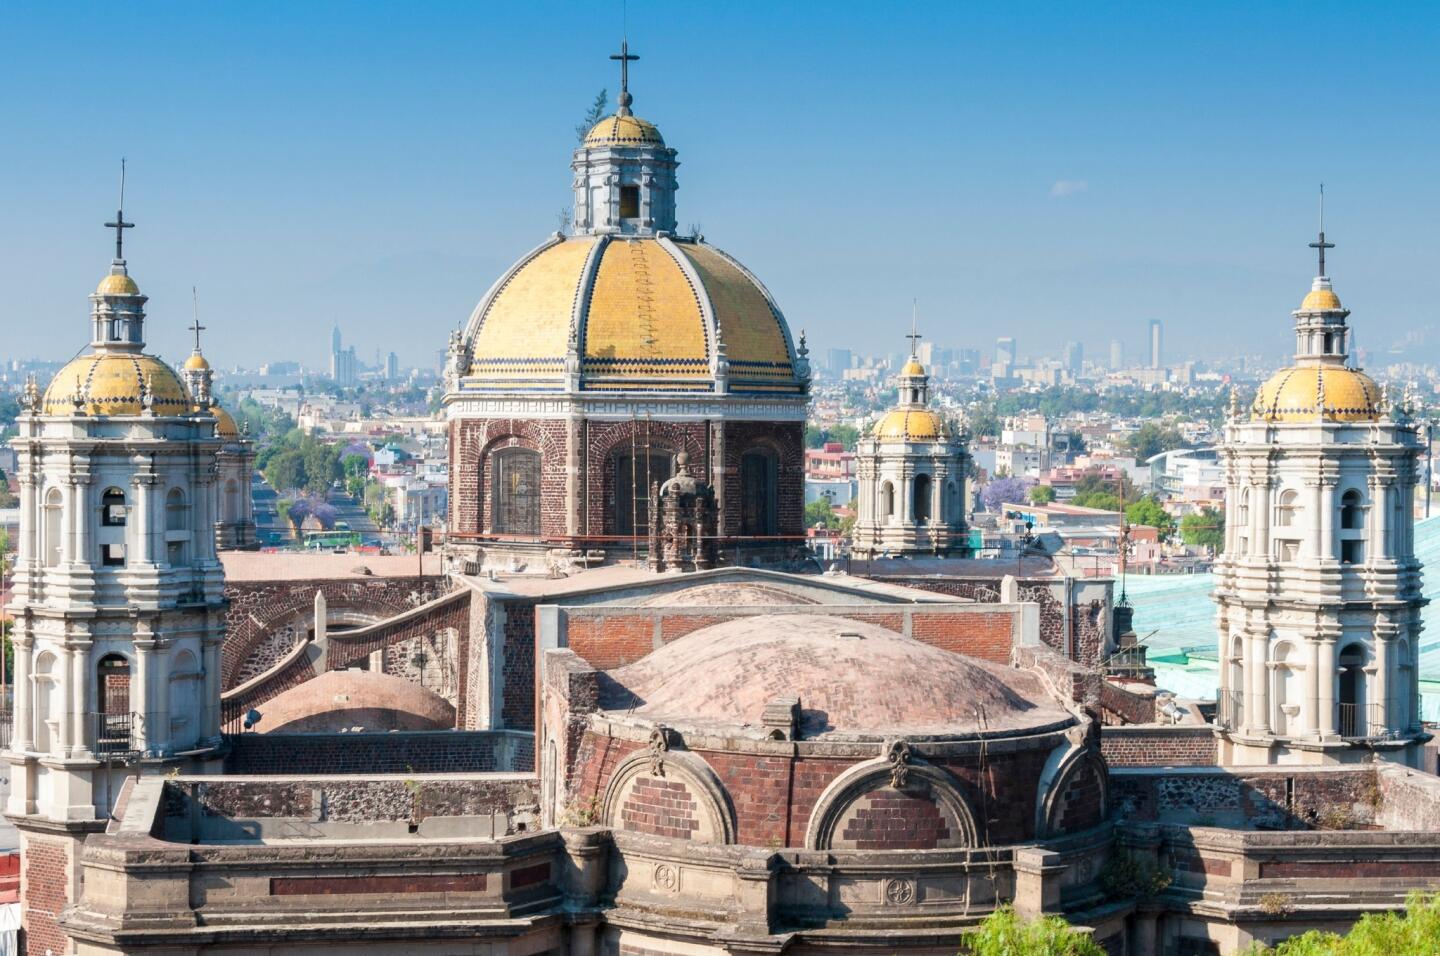 Mexico City's counterculture